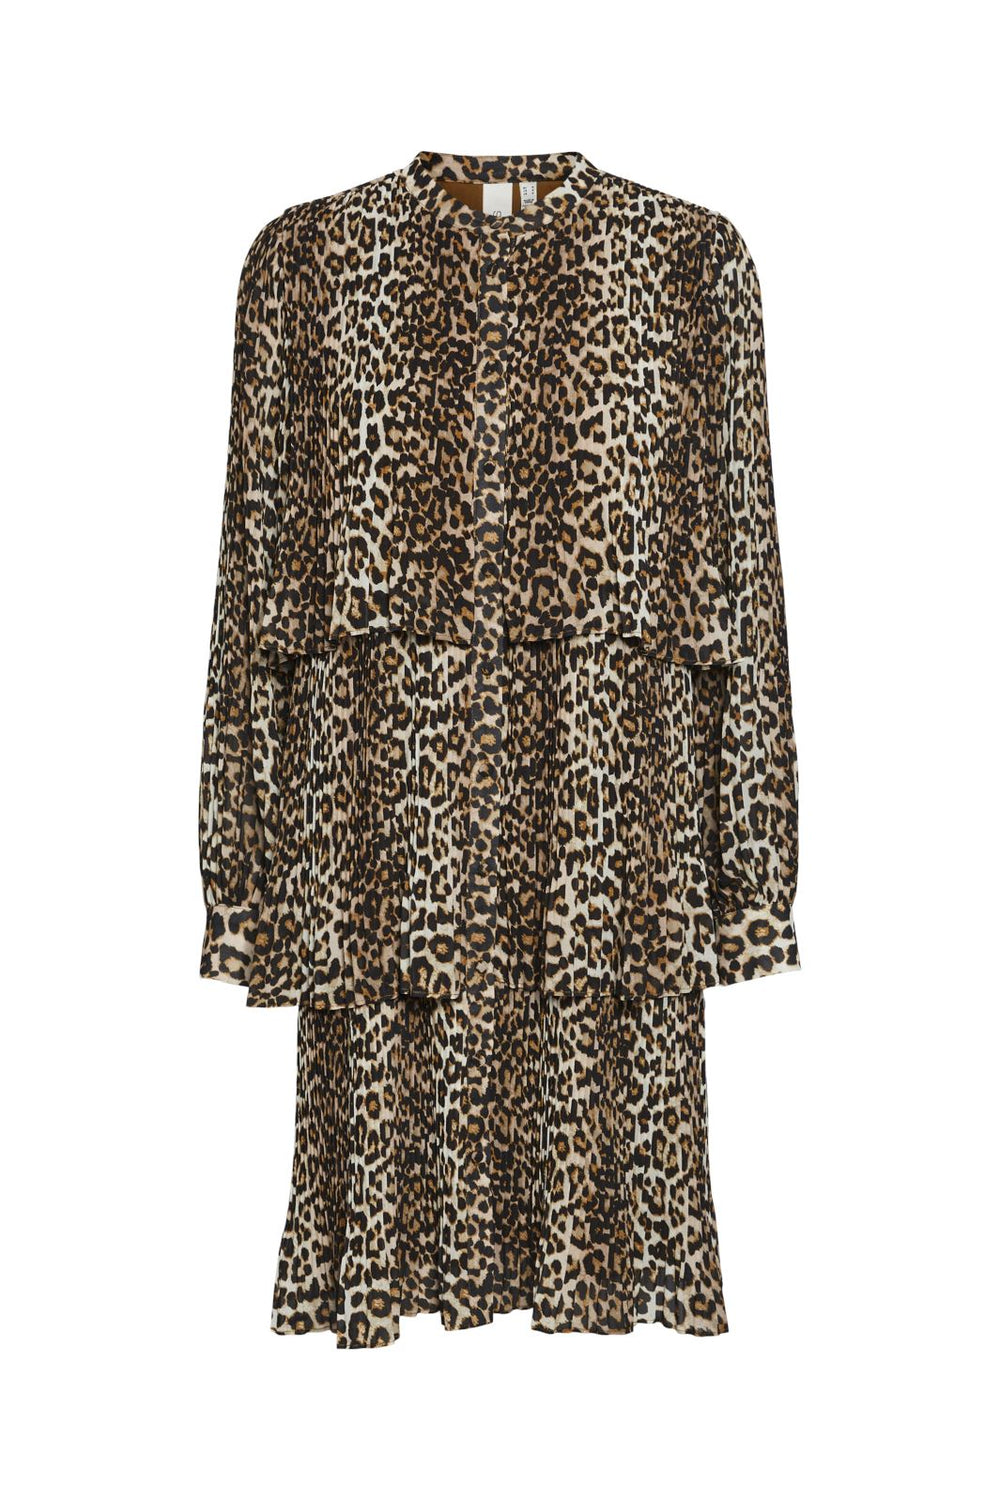 Y.A.S - Yaskalaya Ls Dress - 4568814 Nomad Leopard Print